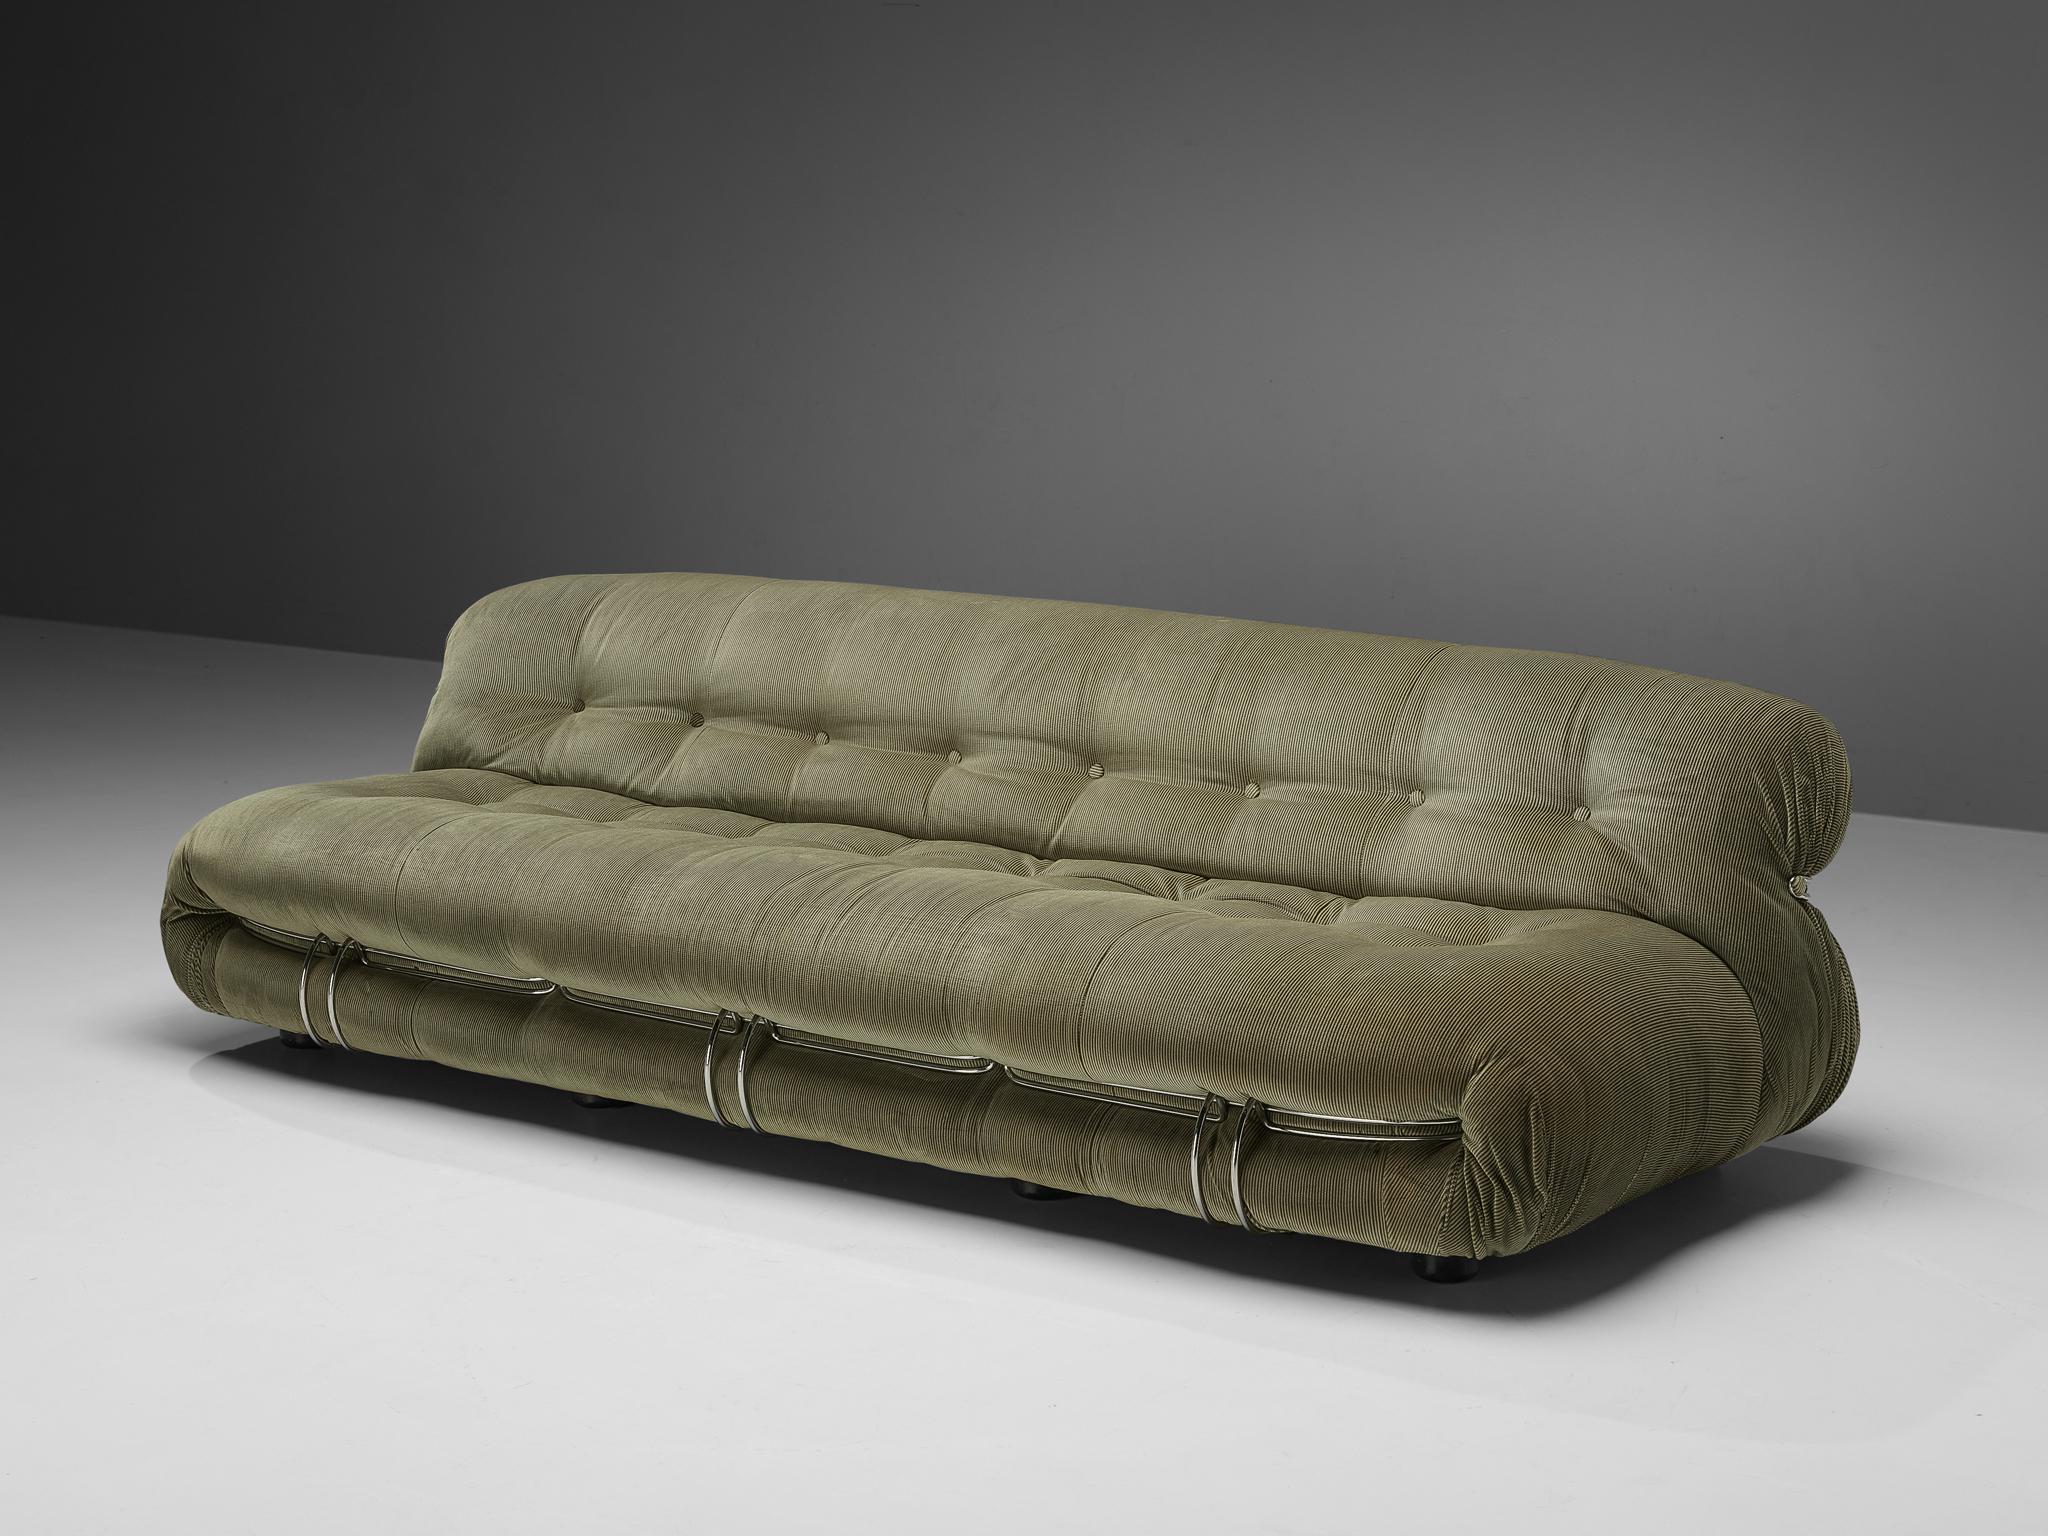 Italian Afra & Tobia Scarpa 'Soriana' Sofa in Soft Green Fabric